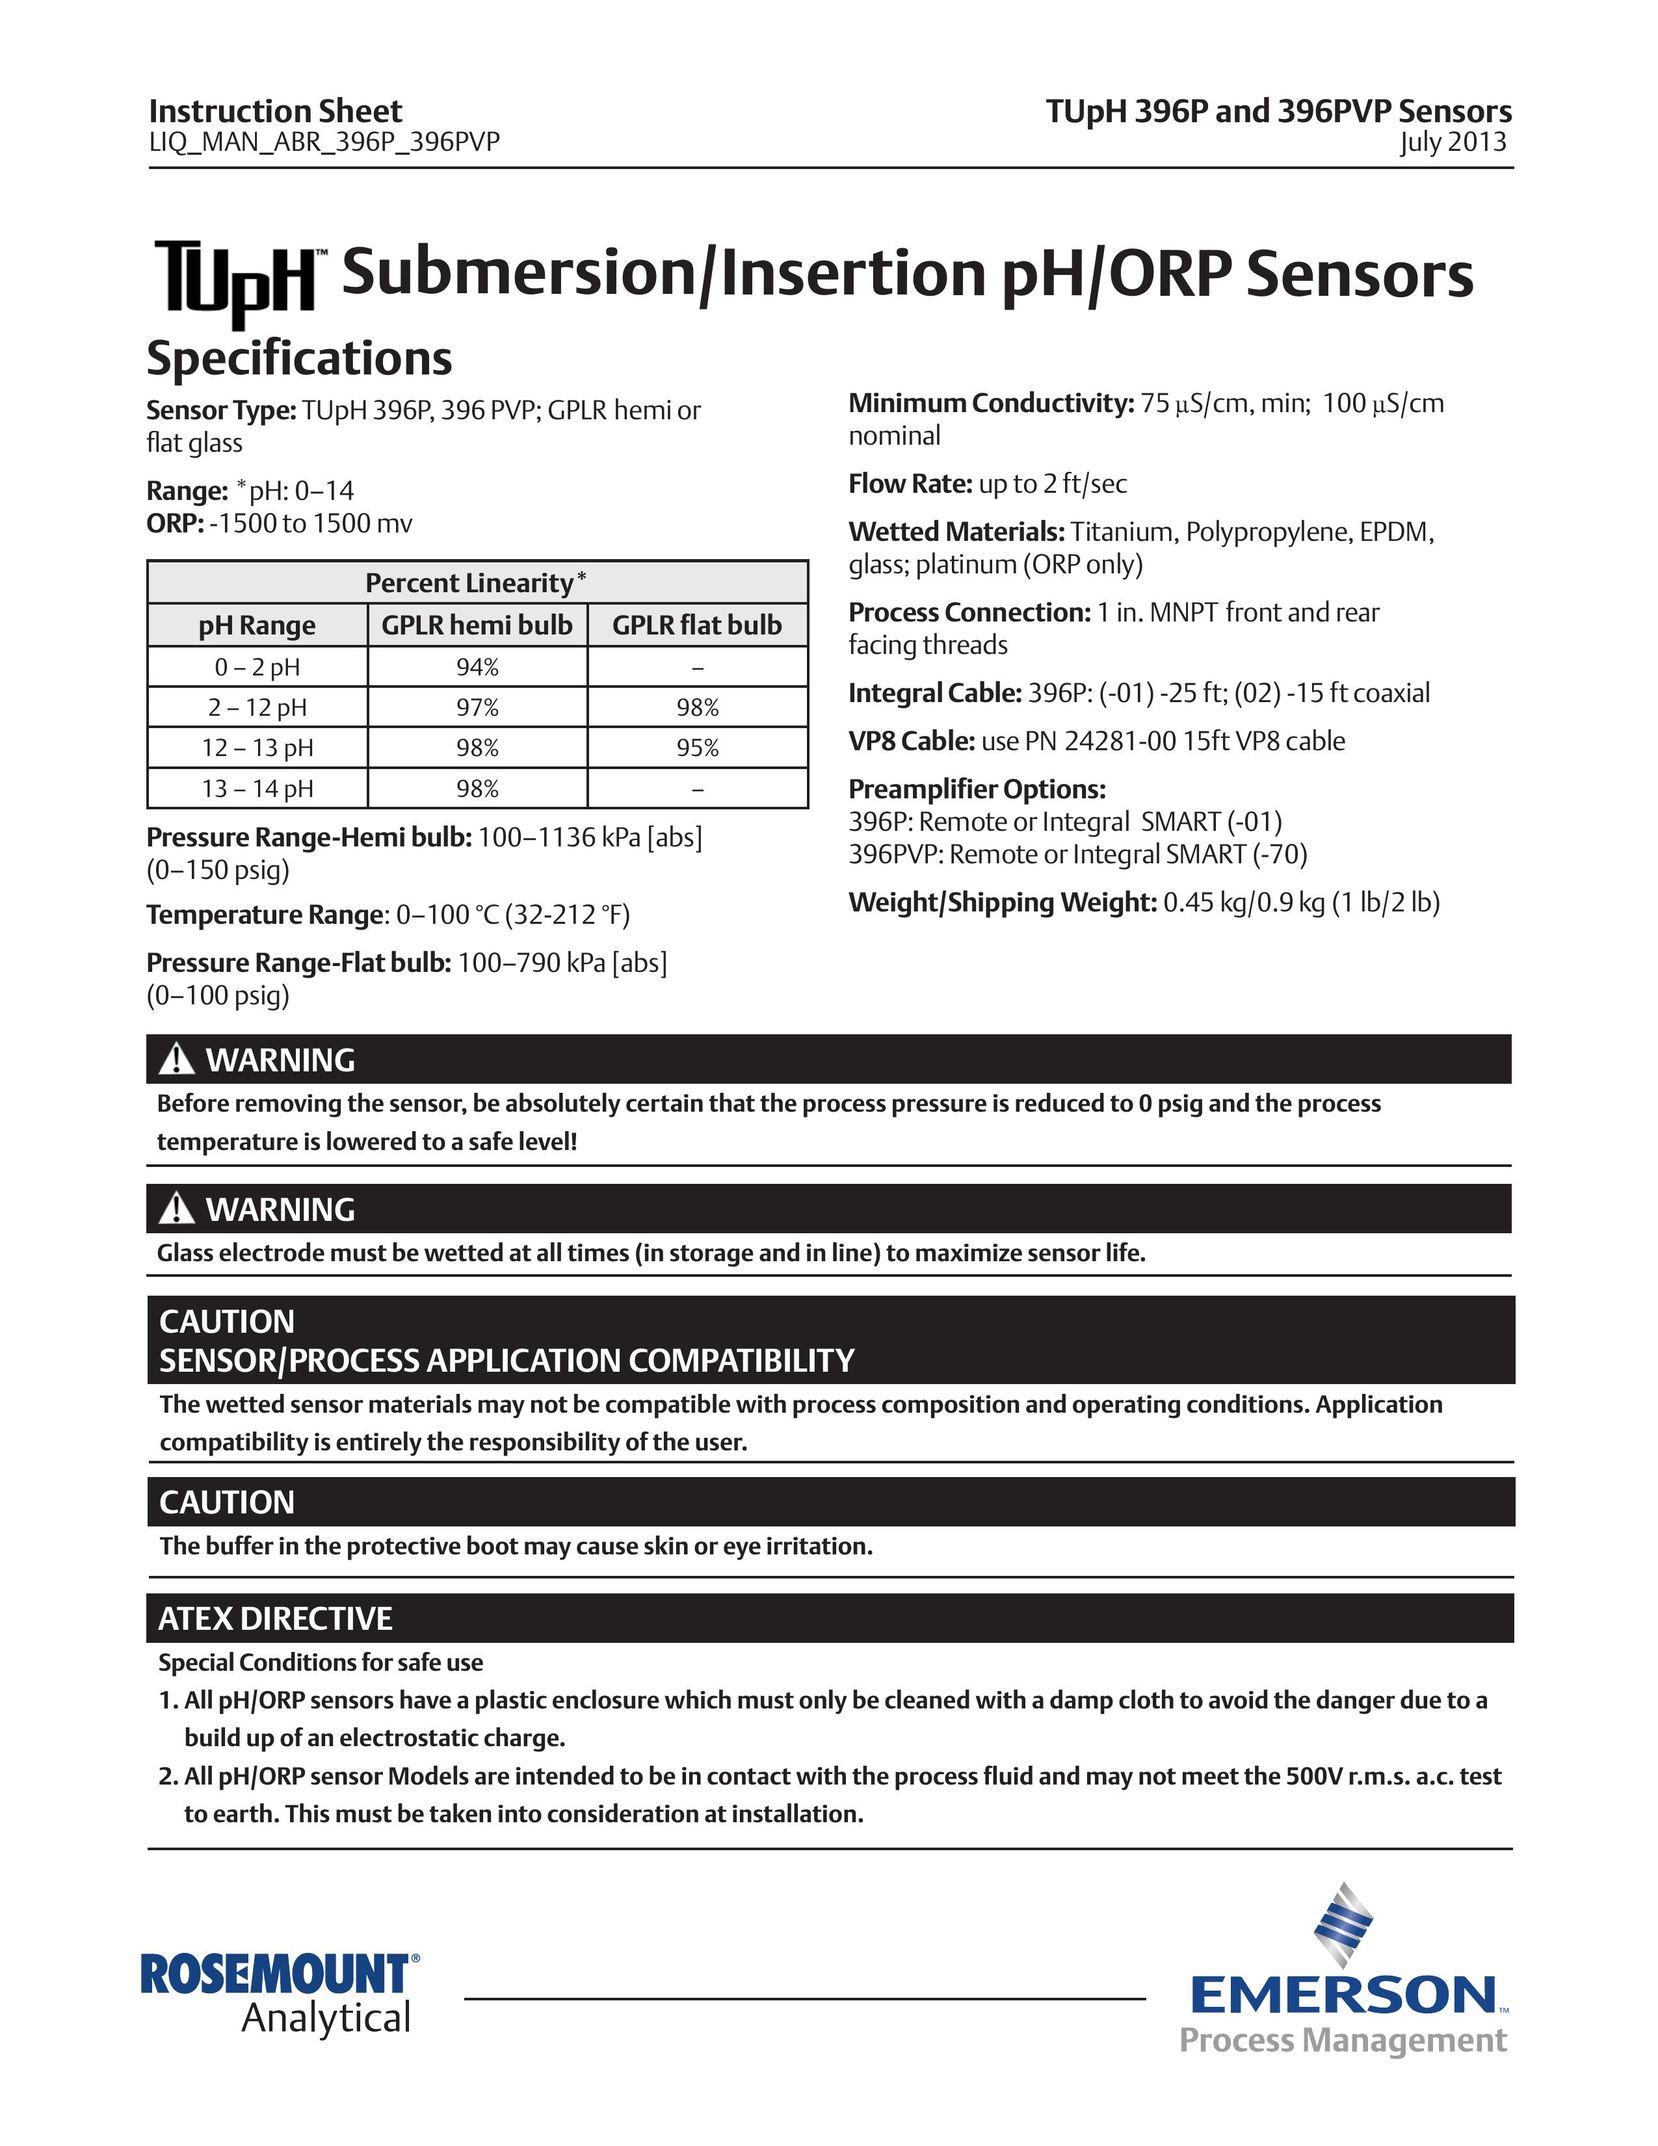 Emerson Process Management 369P Stud Sensor User Manual